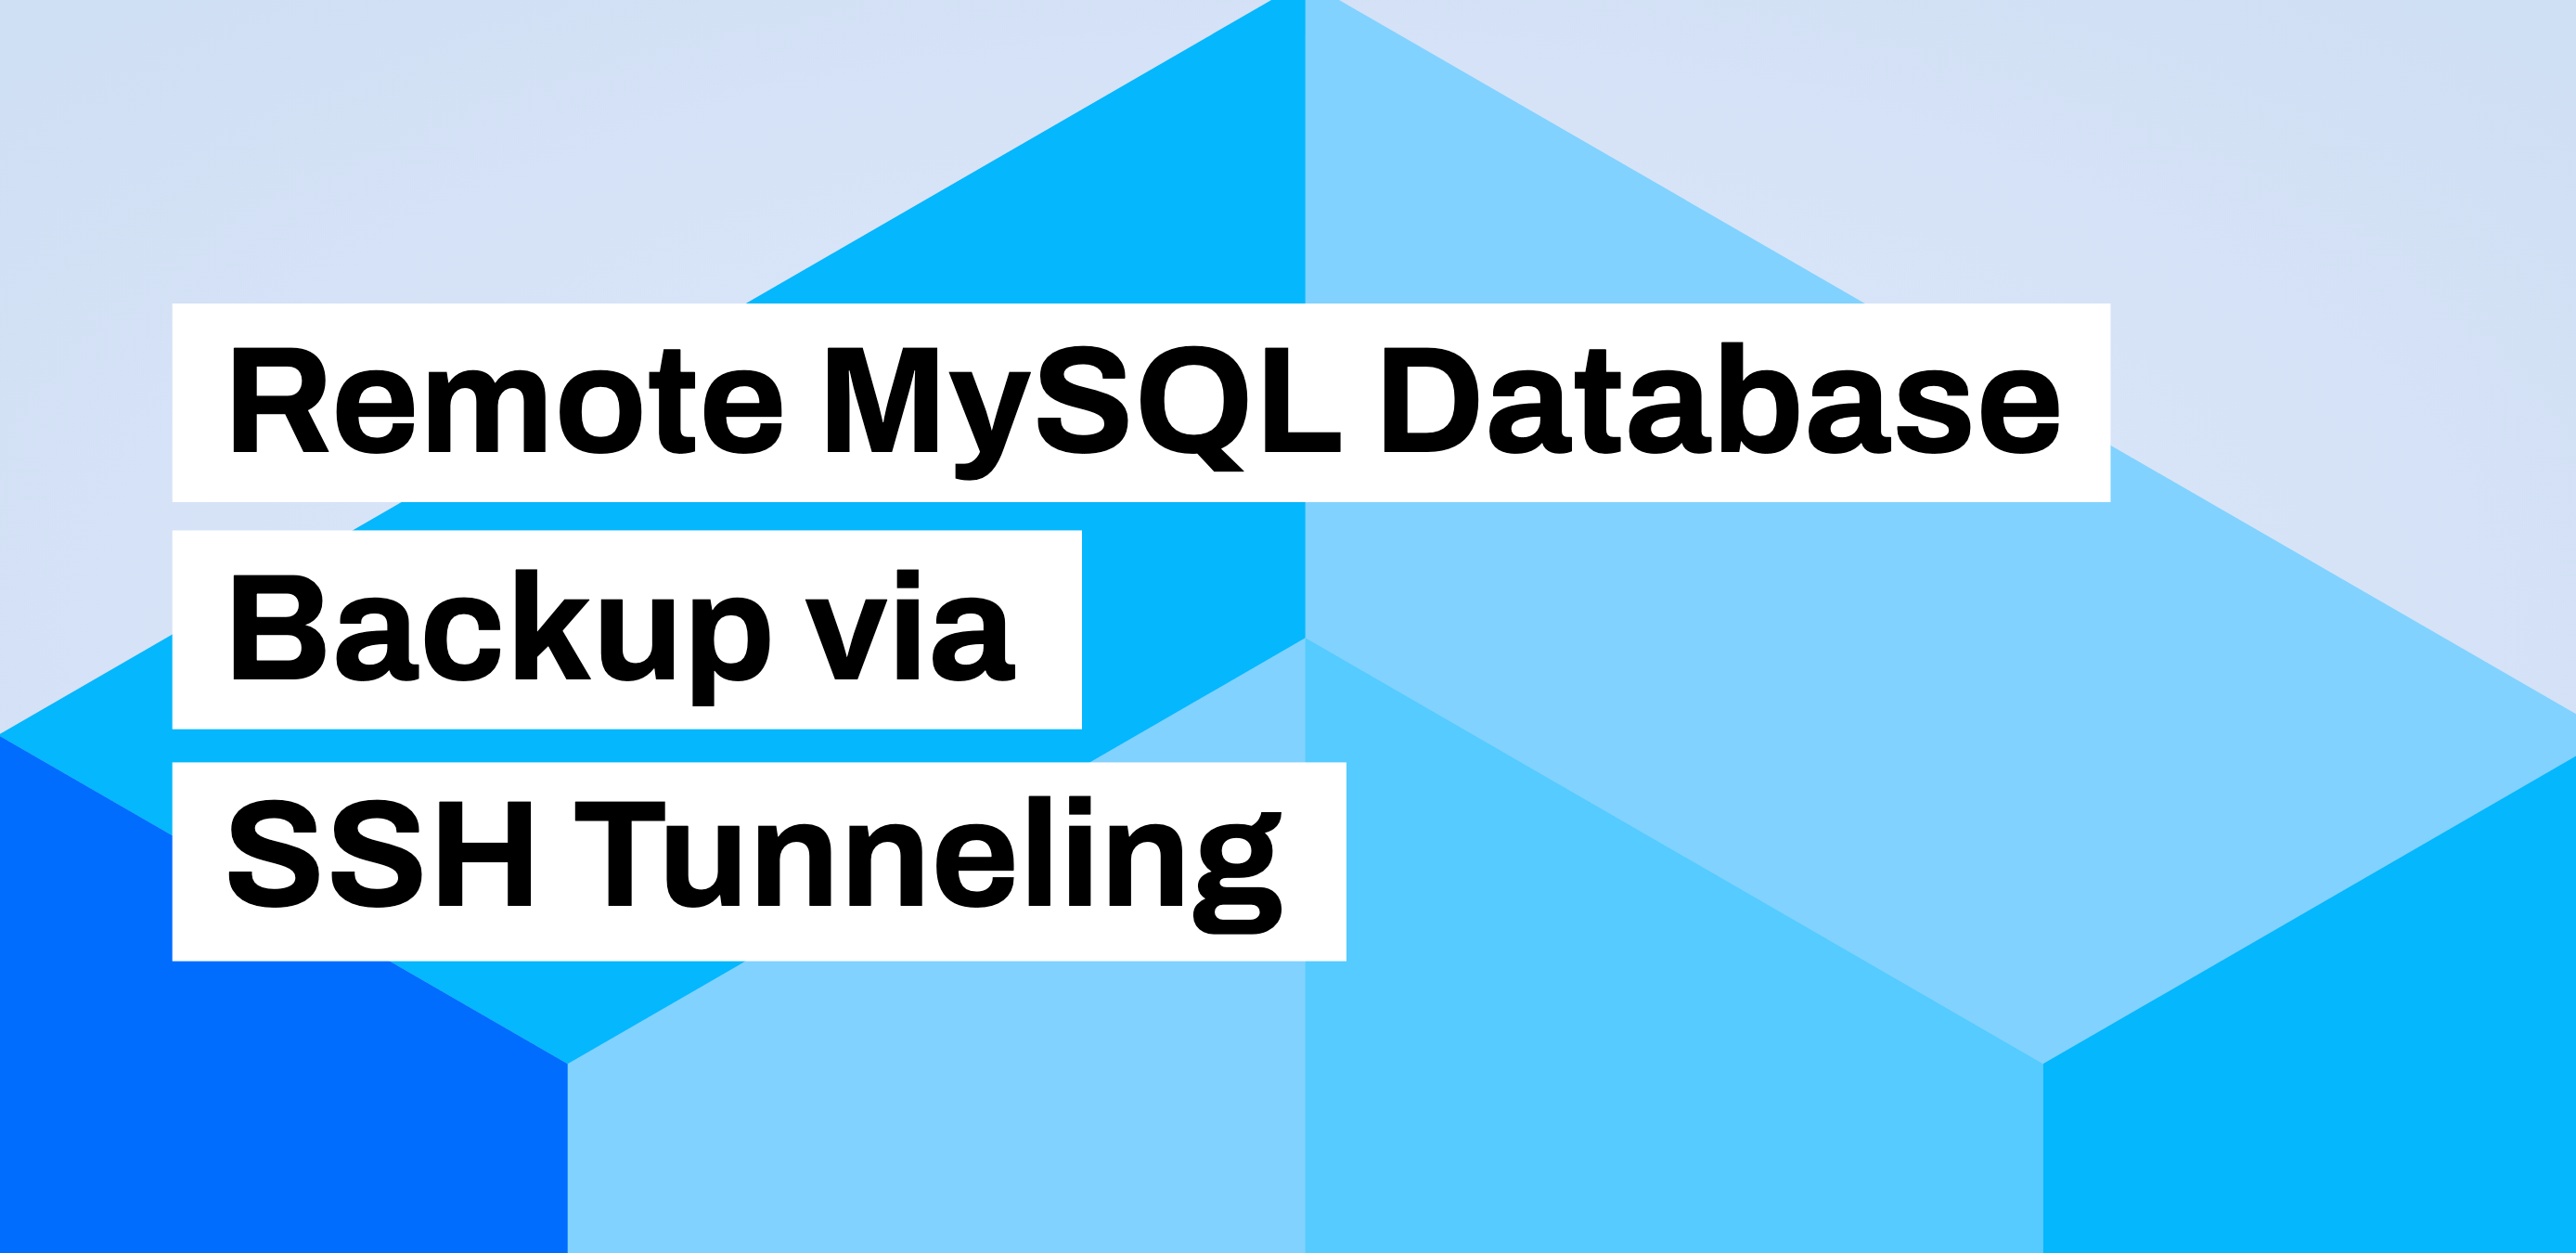 Remote MySQL Database Backup via SSH Tunneling